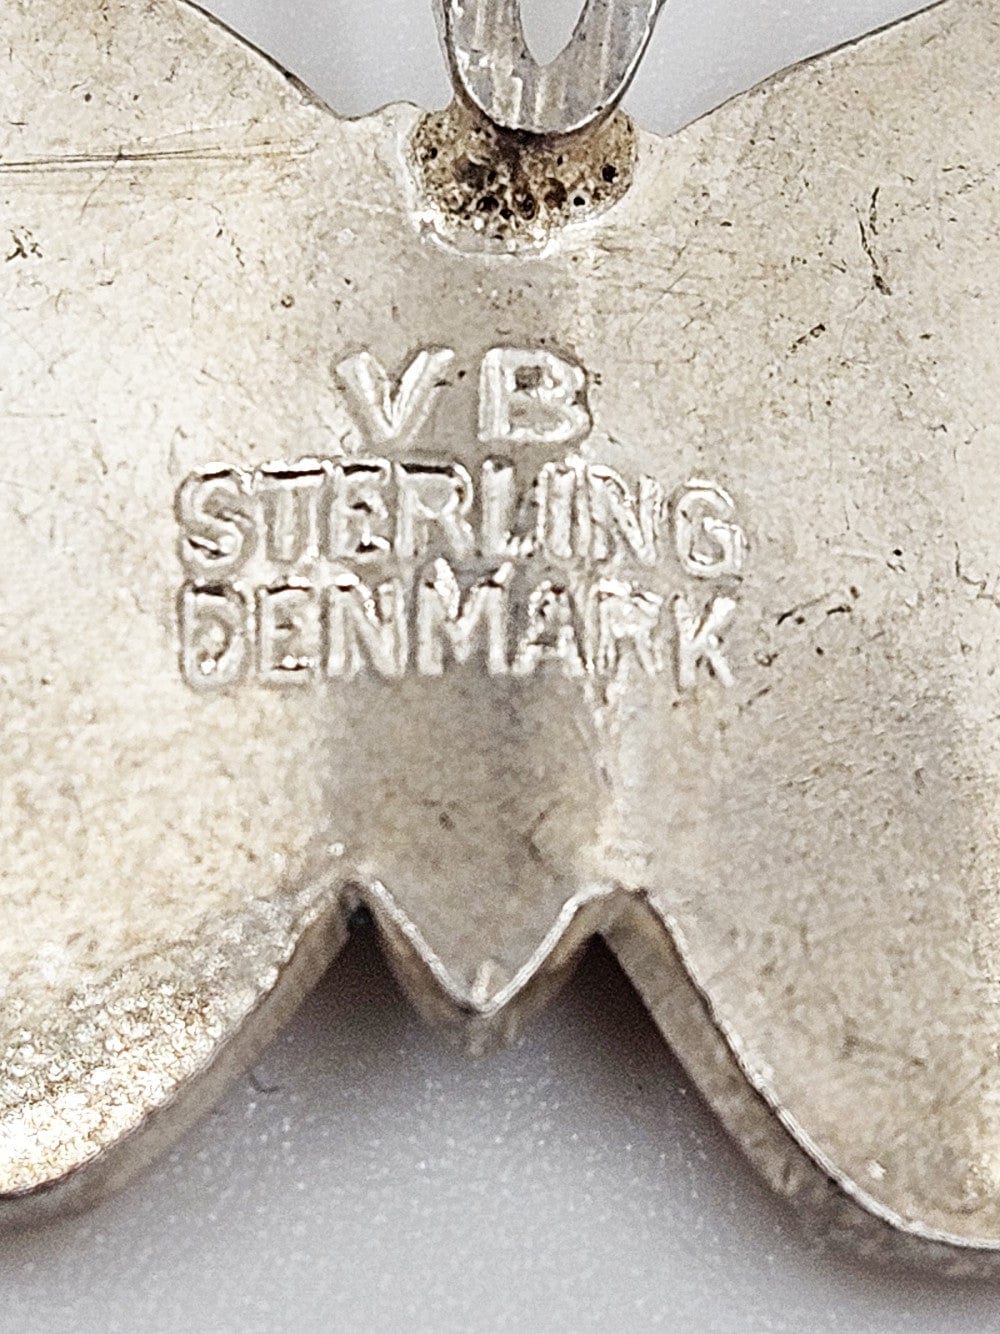 Volmer Bahner Jewelry Denmark Volmer Bahner Sterling Petite Pink Enamel Butterfly Brooch C. 1950s